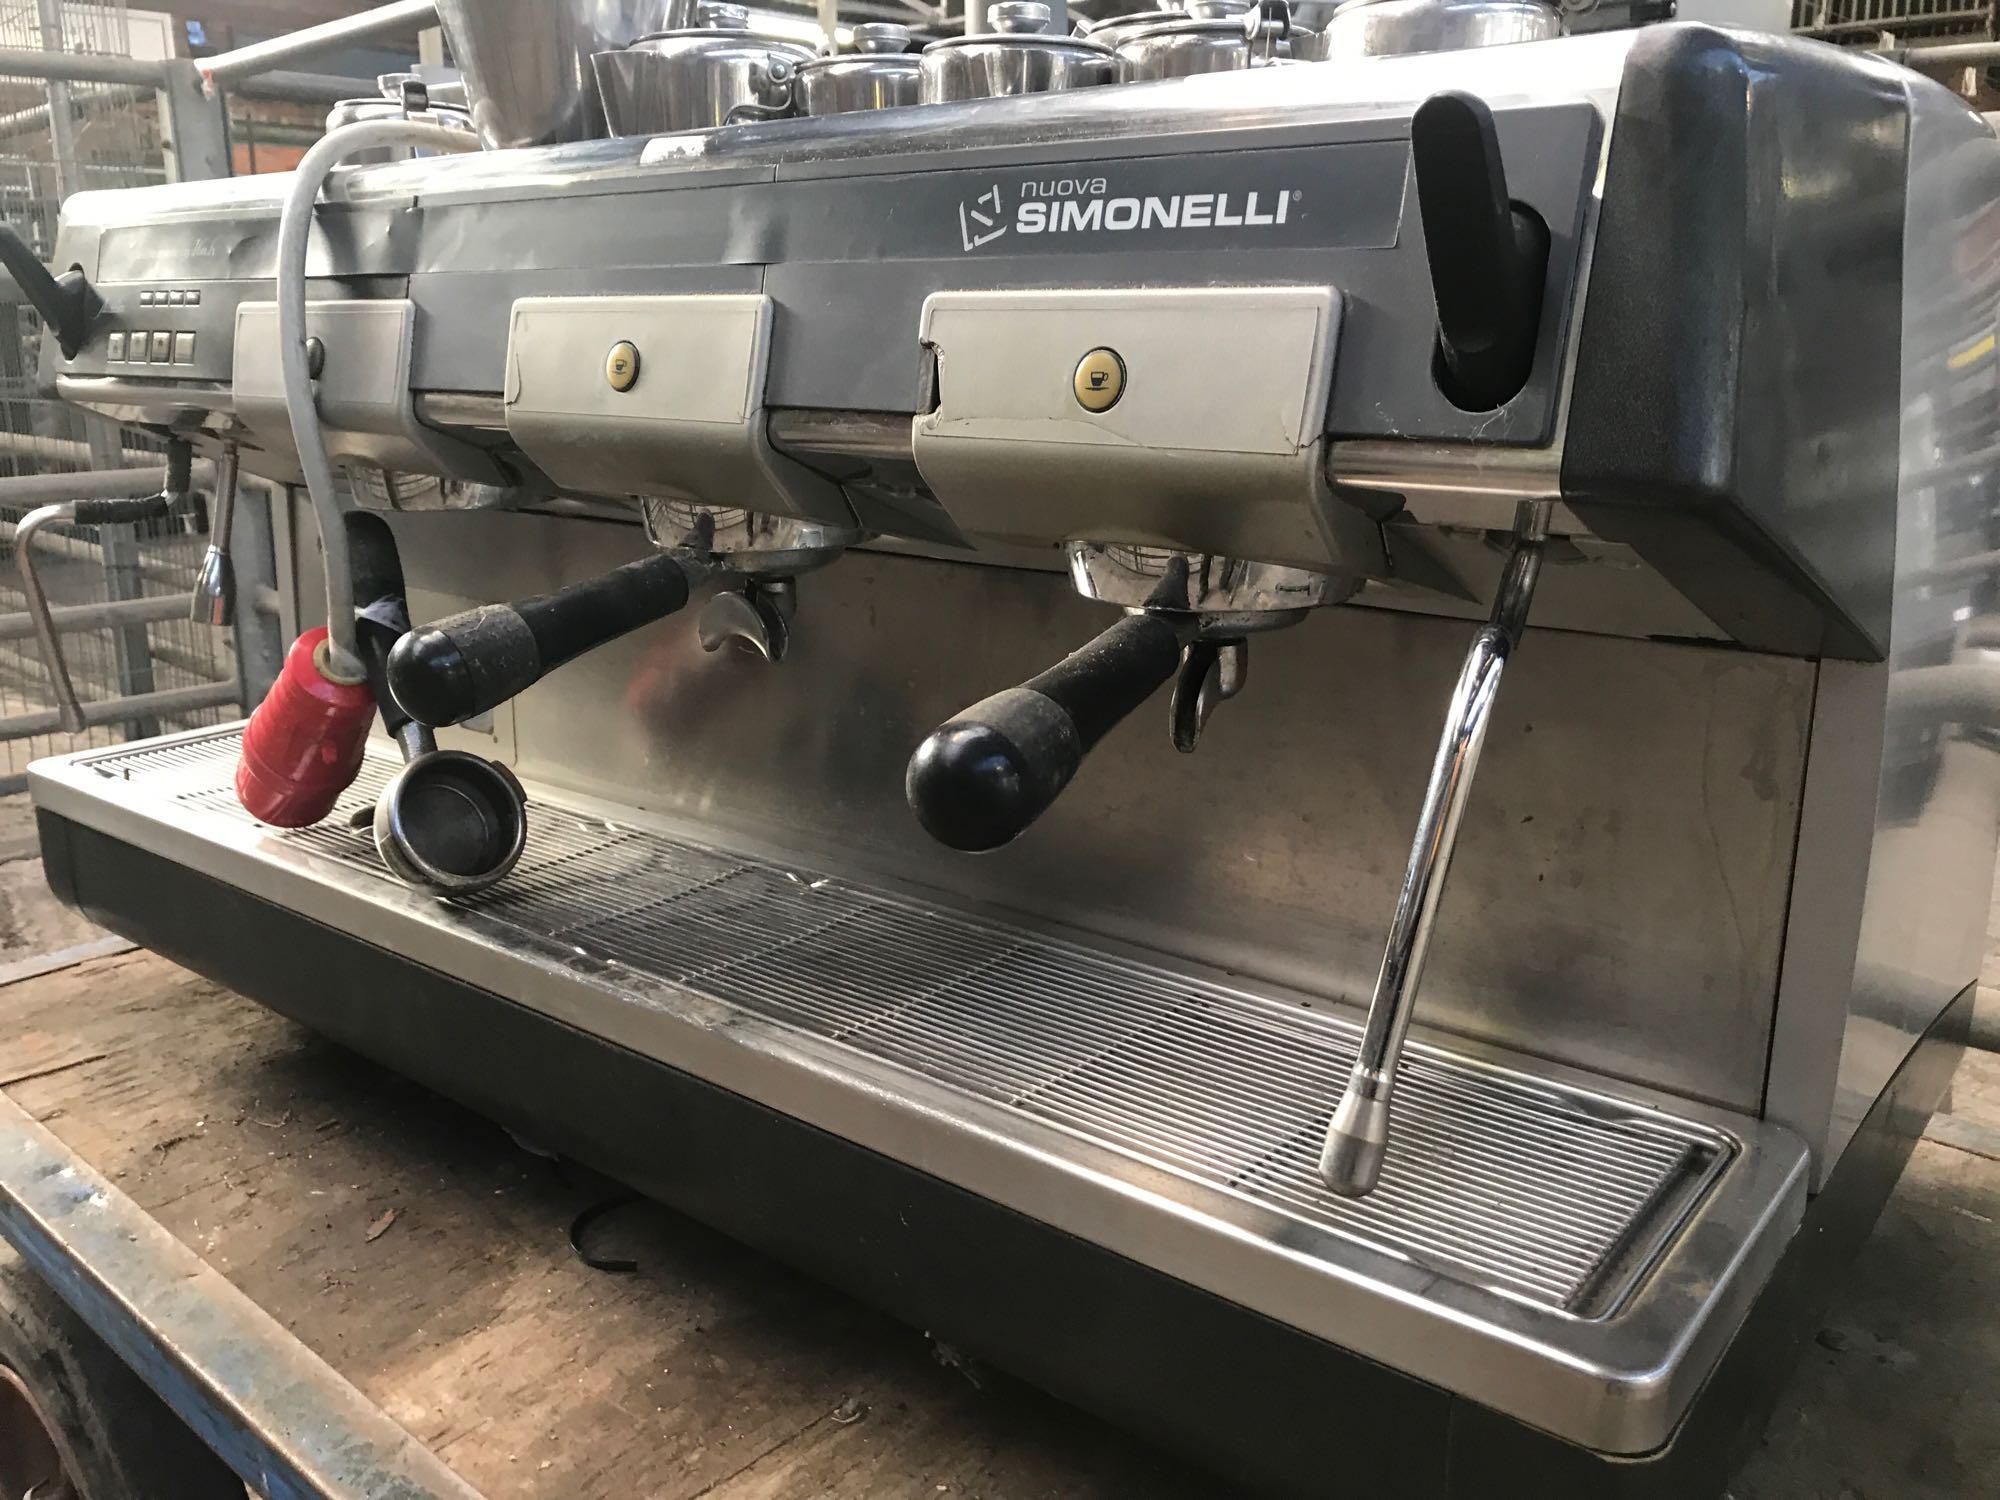 Nuova Simonelli espresso machine - Image 4 of 5